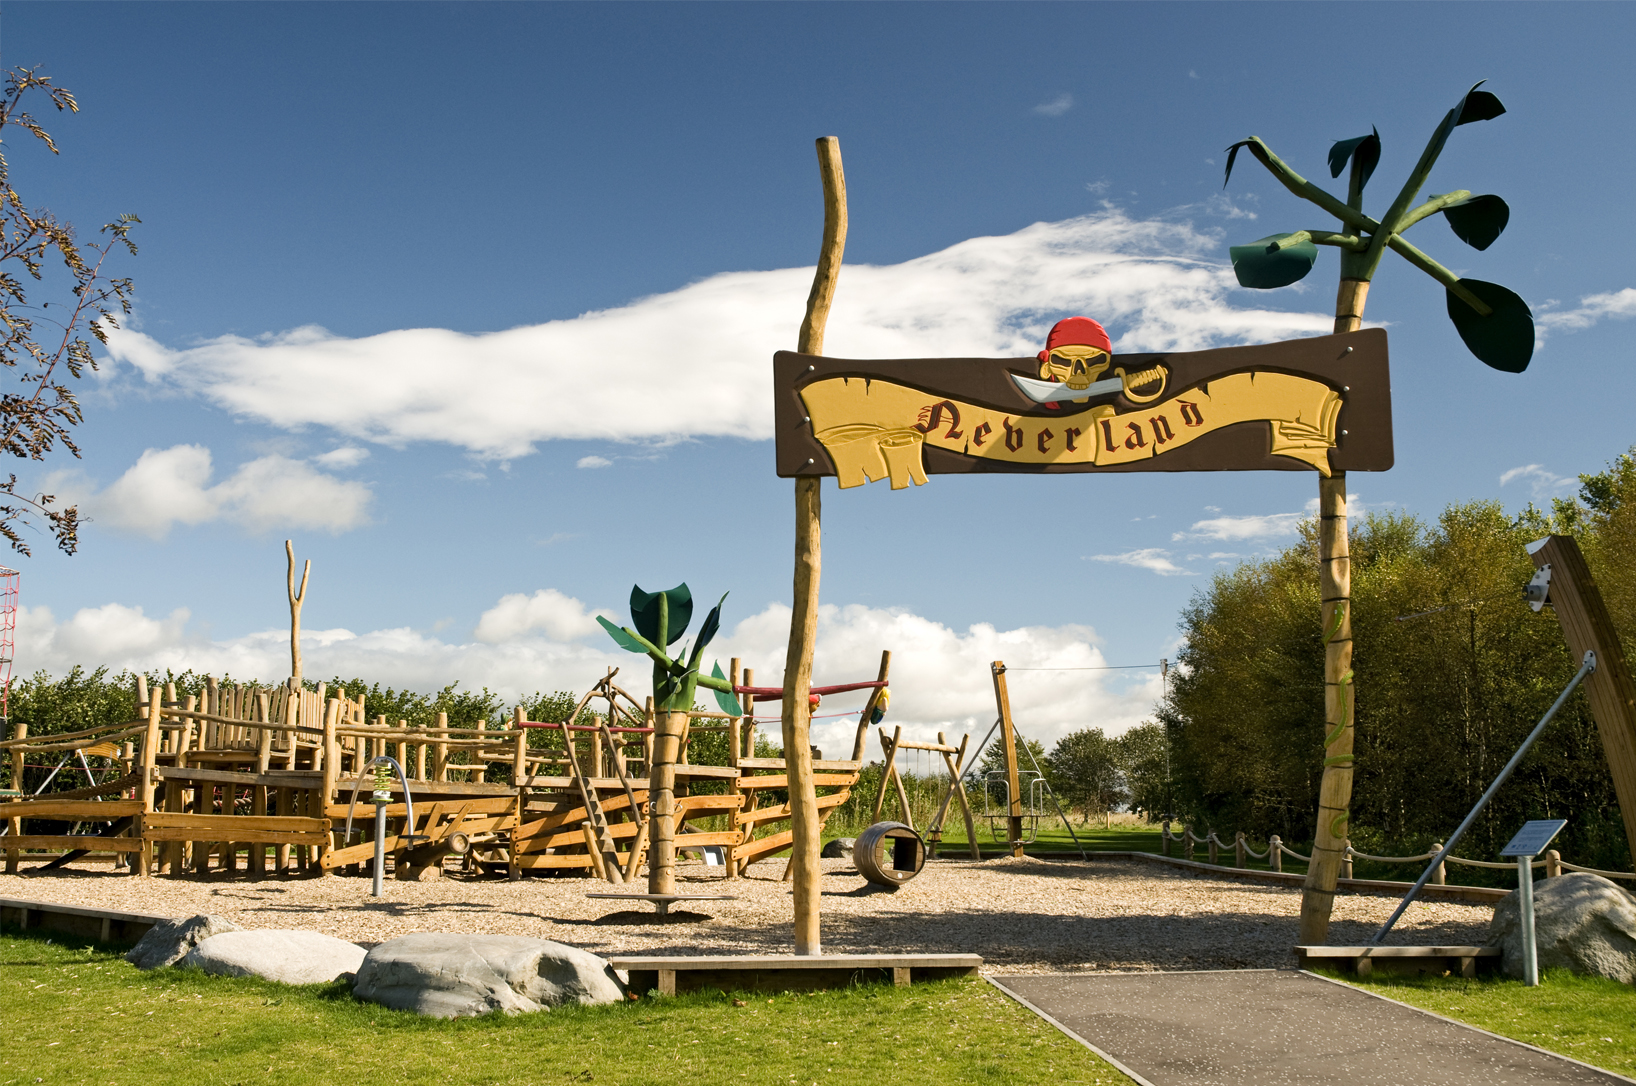 Neverland Play Area, Kirriemuir, Angus, Scotland | The Children's